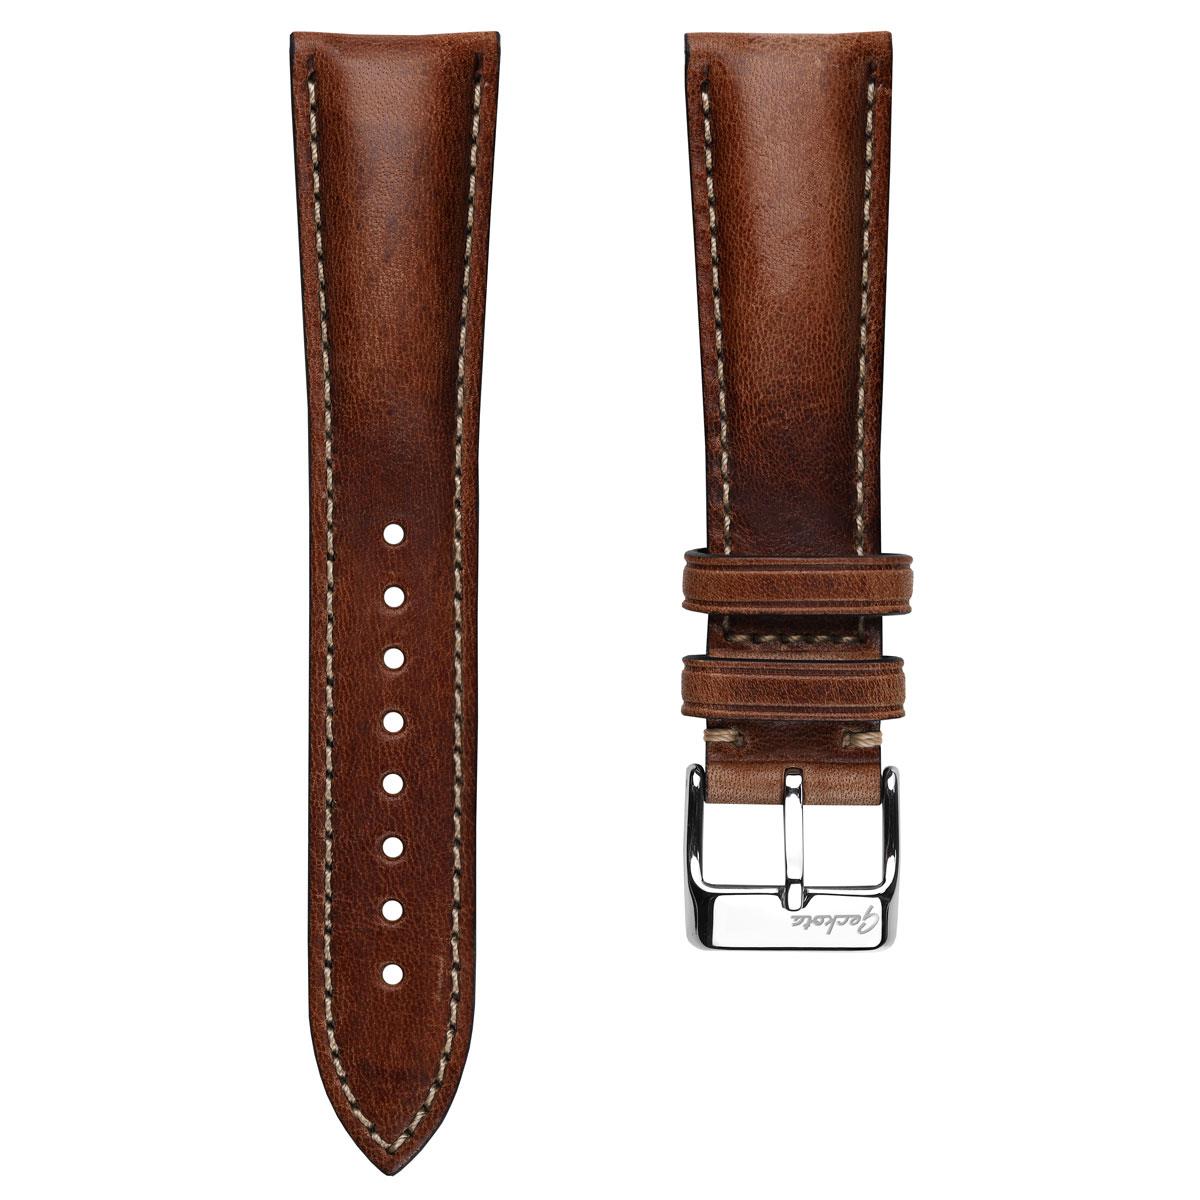 Geckota Vintage Highley Genuine Leather Watch Strap - Reddish Brown